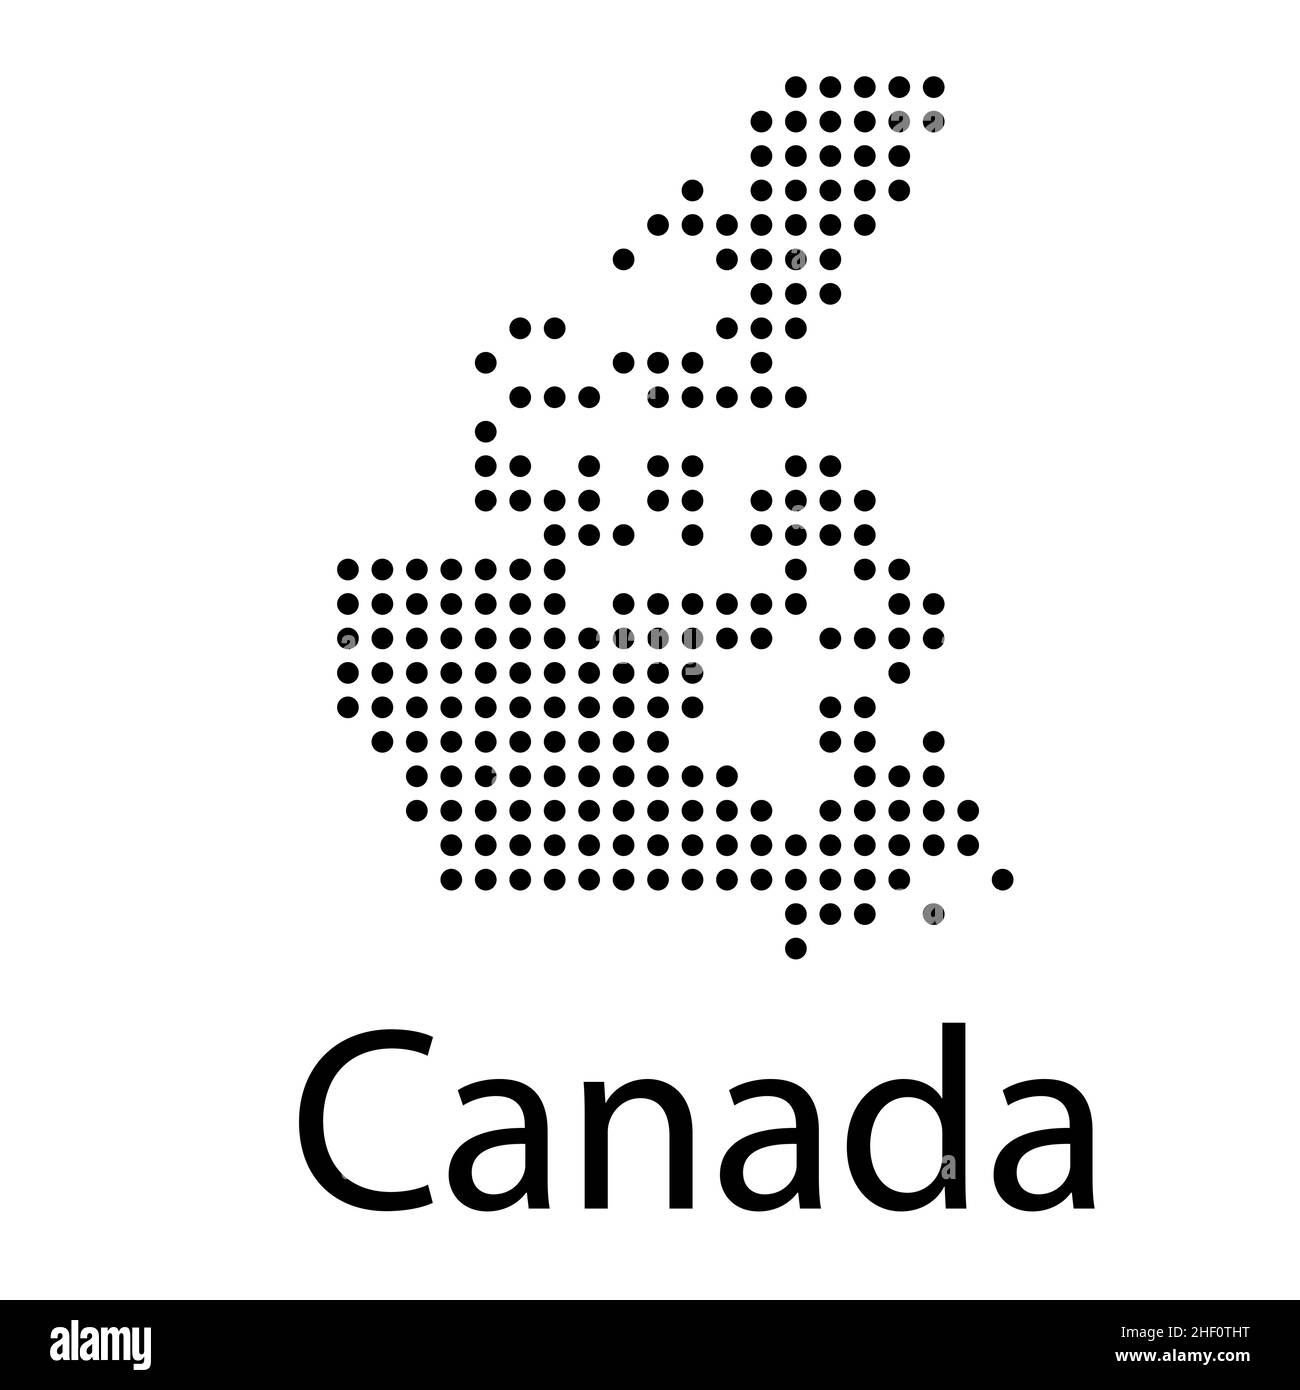 Canada map,vector halftone dots esp 10 Stock Vector